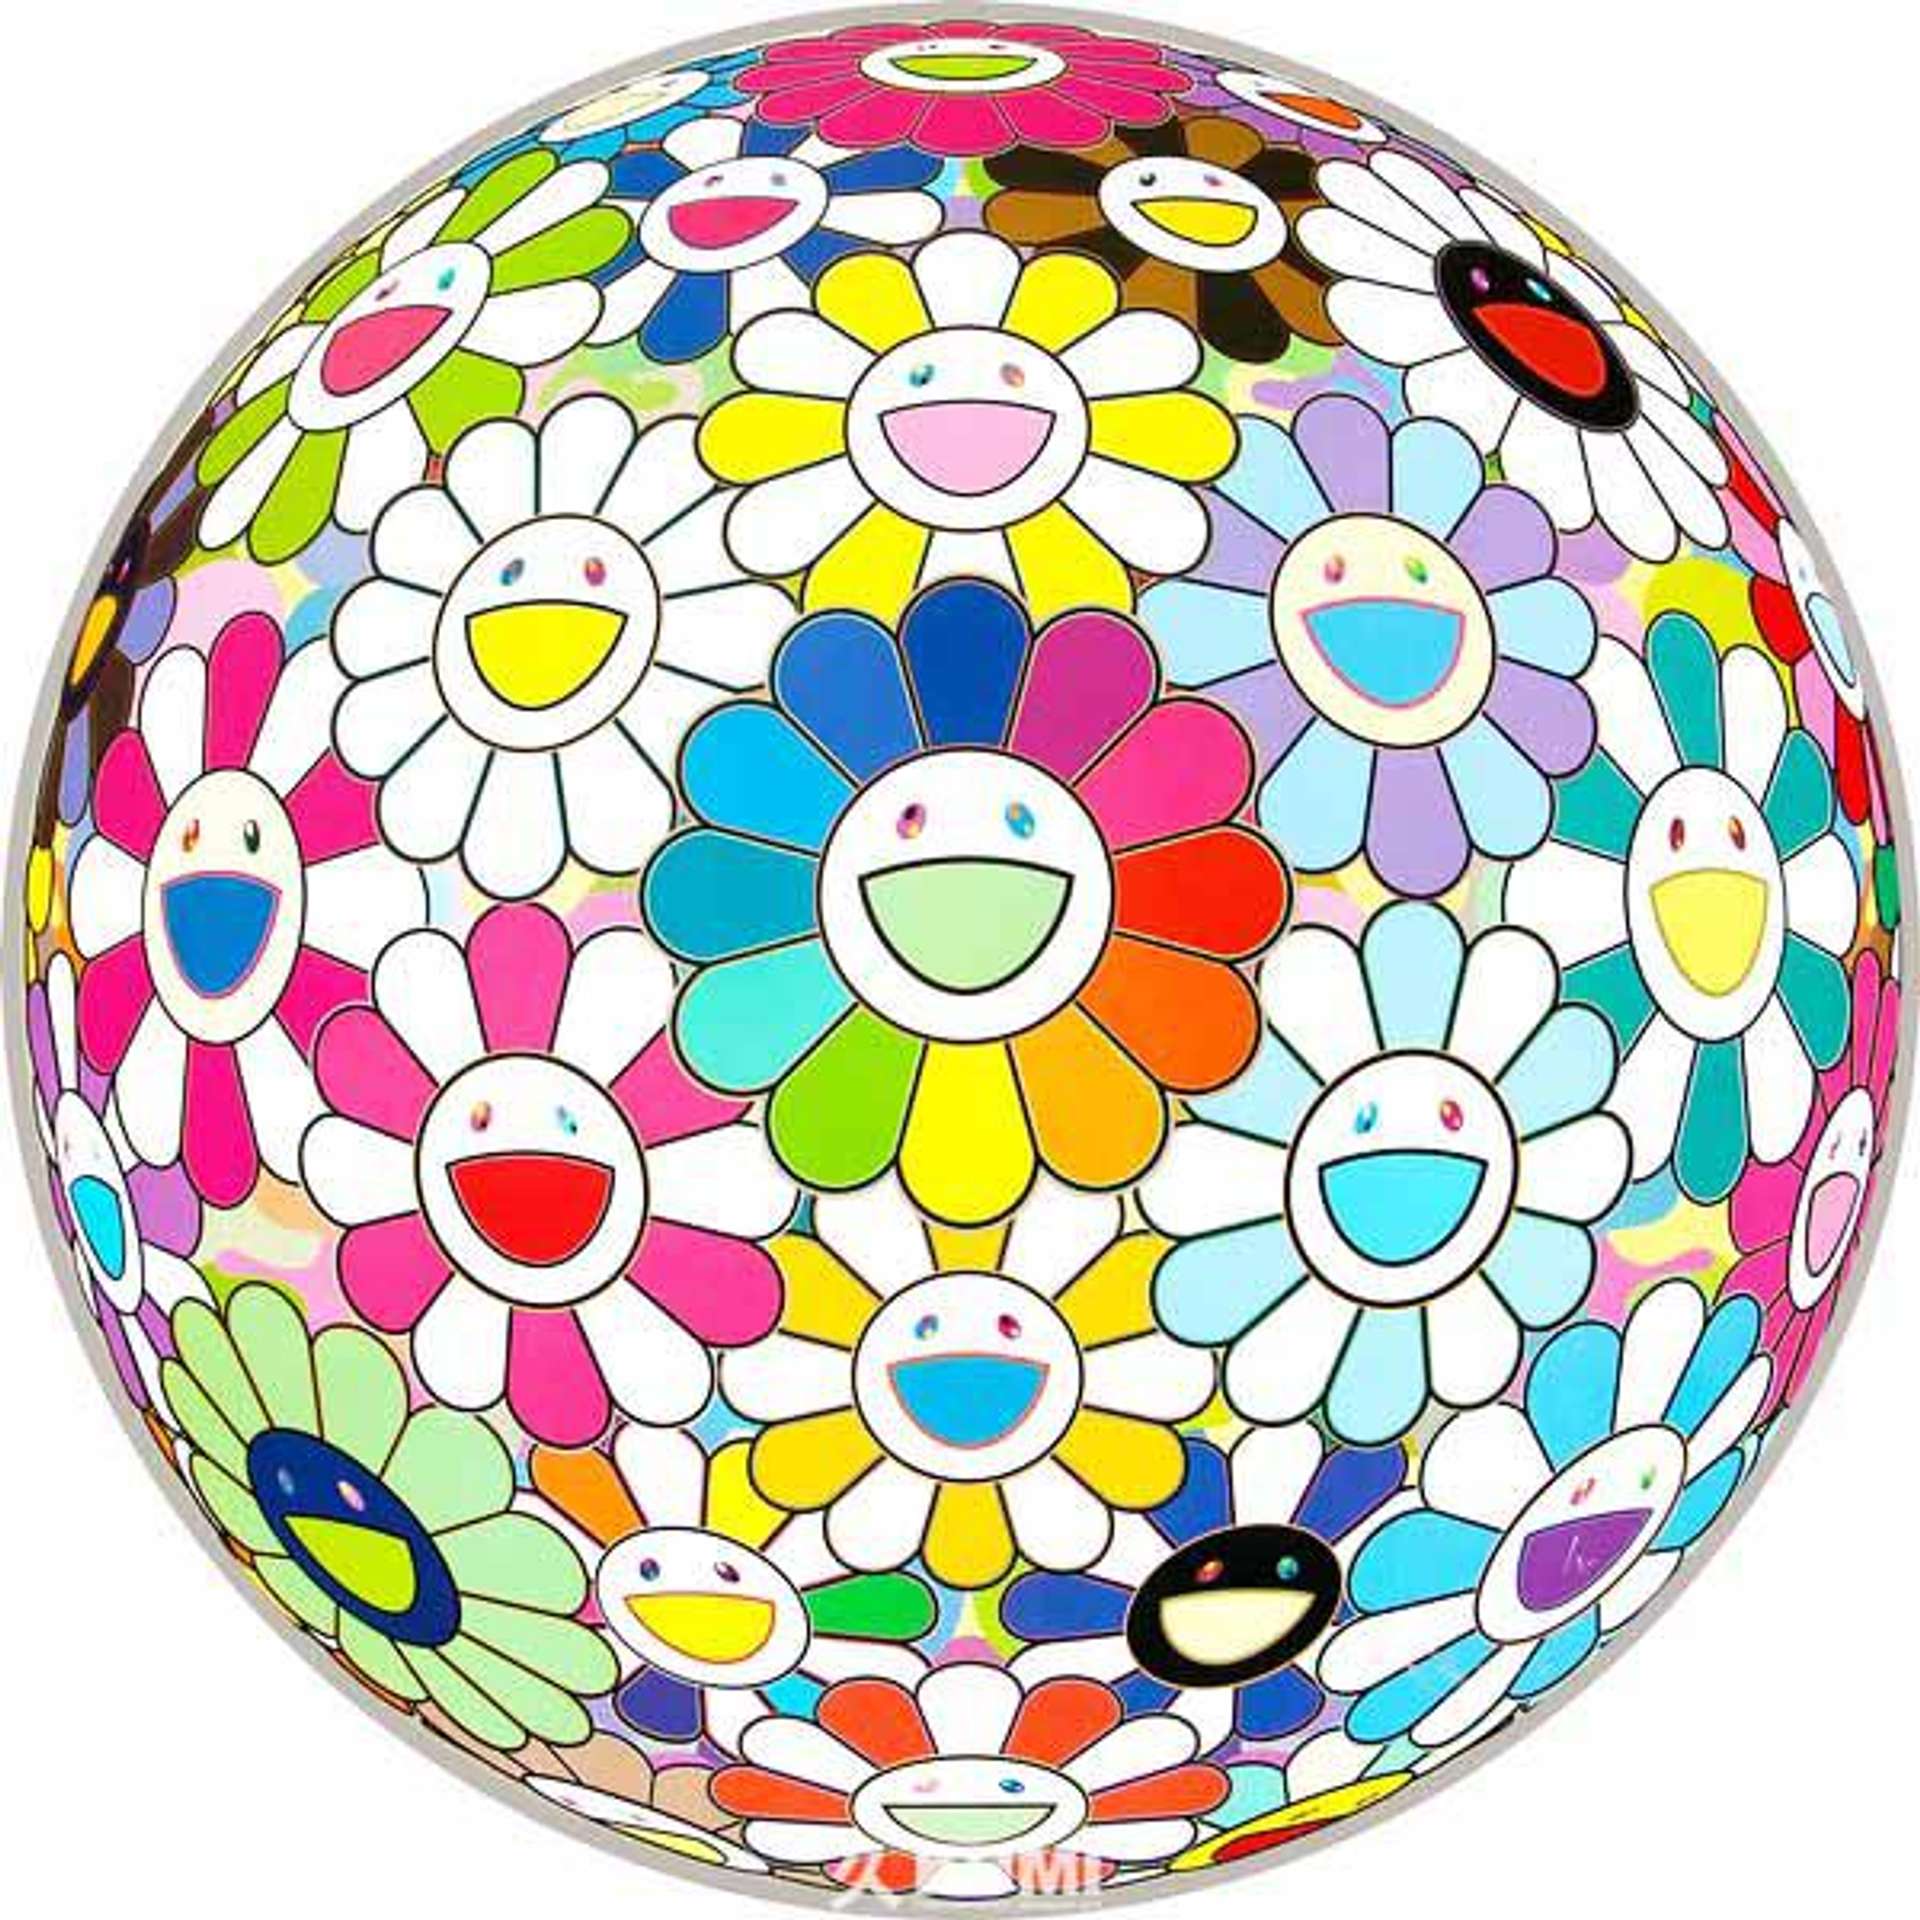 Takashi Murakami: Flower Ball: Want To Hold You - Signed Print